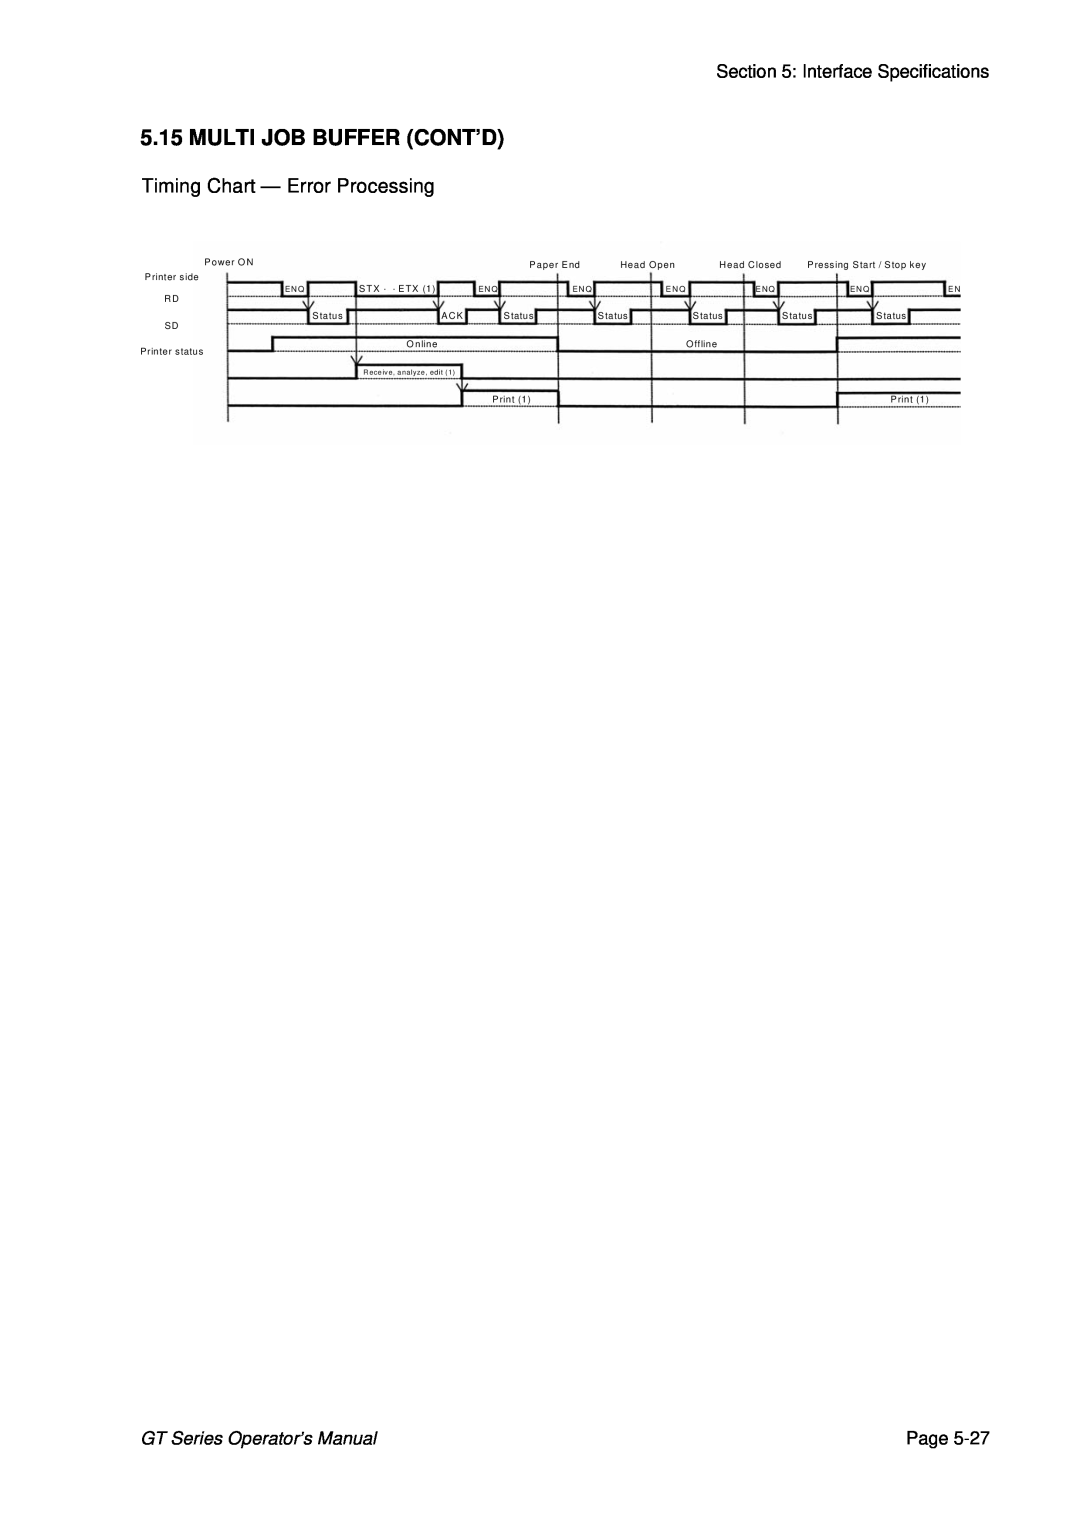 SATO GT424 manual Multi Job Buffer Cont’D, Timing Chart - Error Processing, GT Series Operator’s Manual, Page 